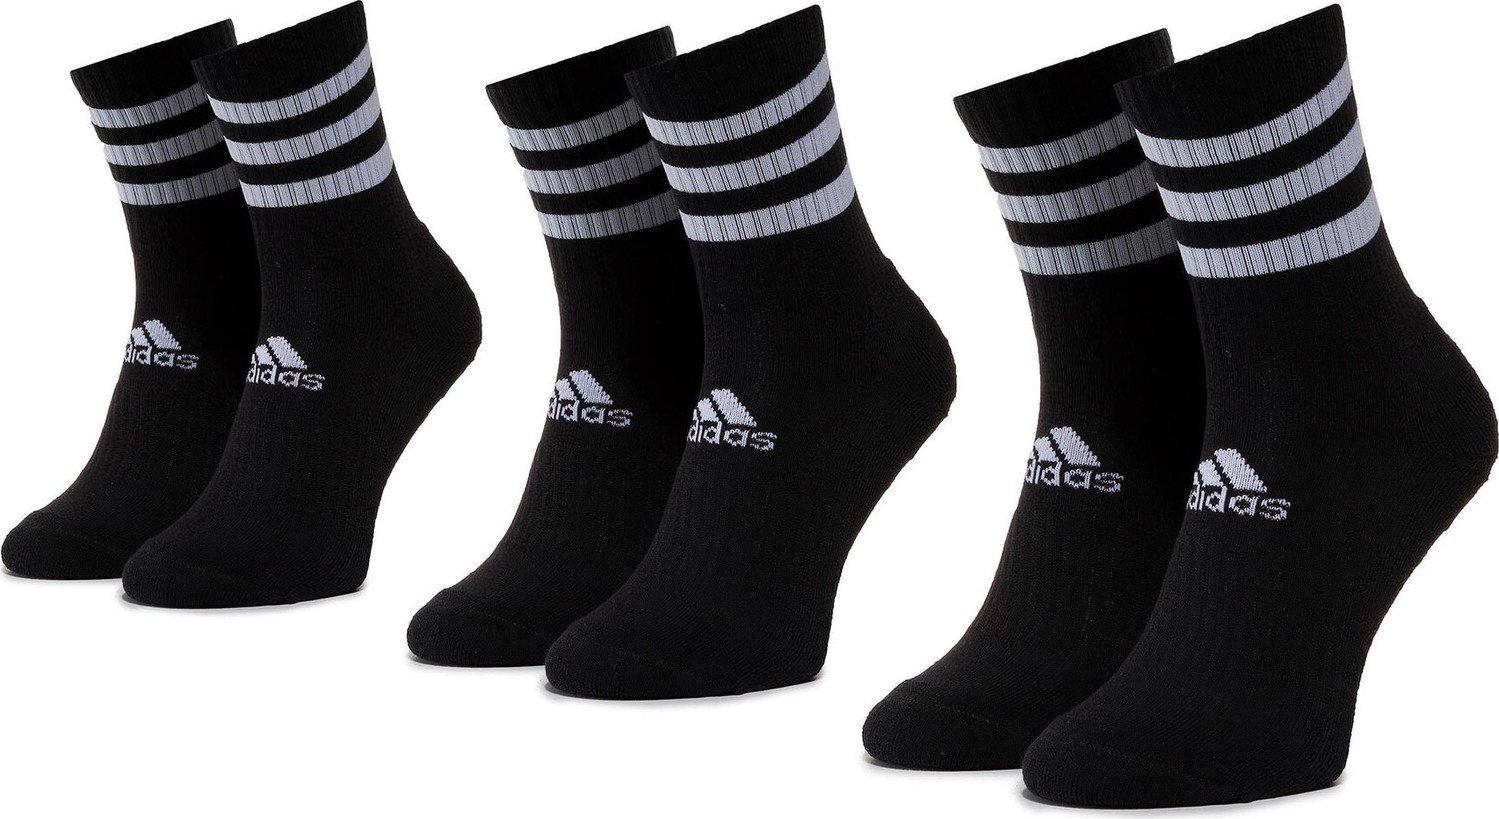 Sada 3 párů vysokých ponožek unisex adidas 3s Csh Crw3p DZ9347 Black/Black/Black